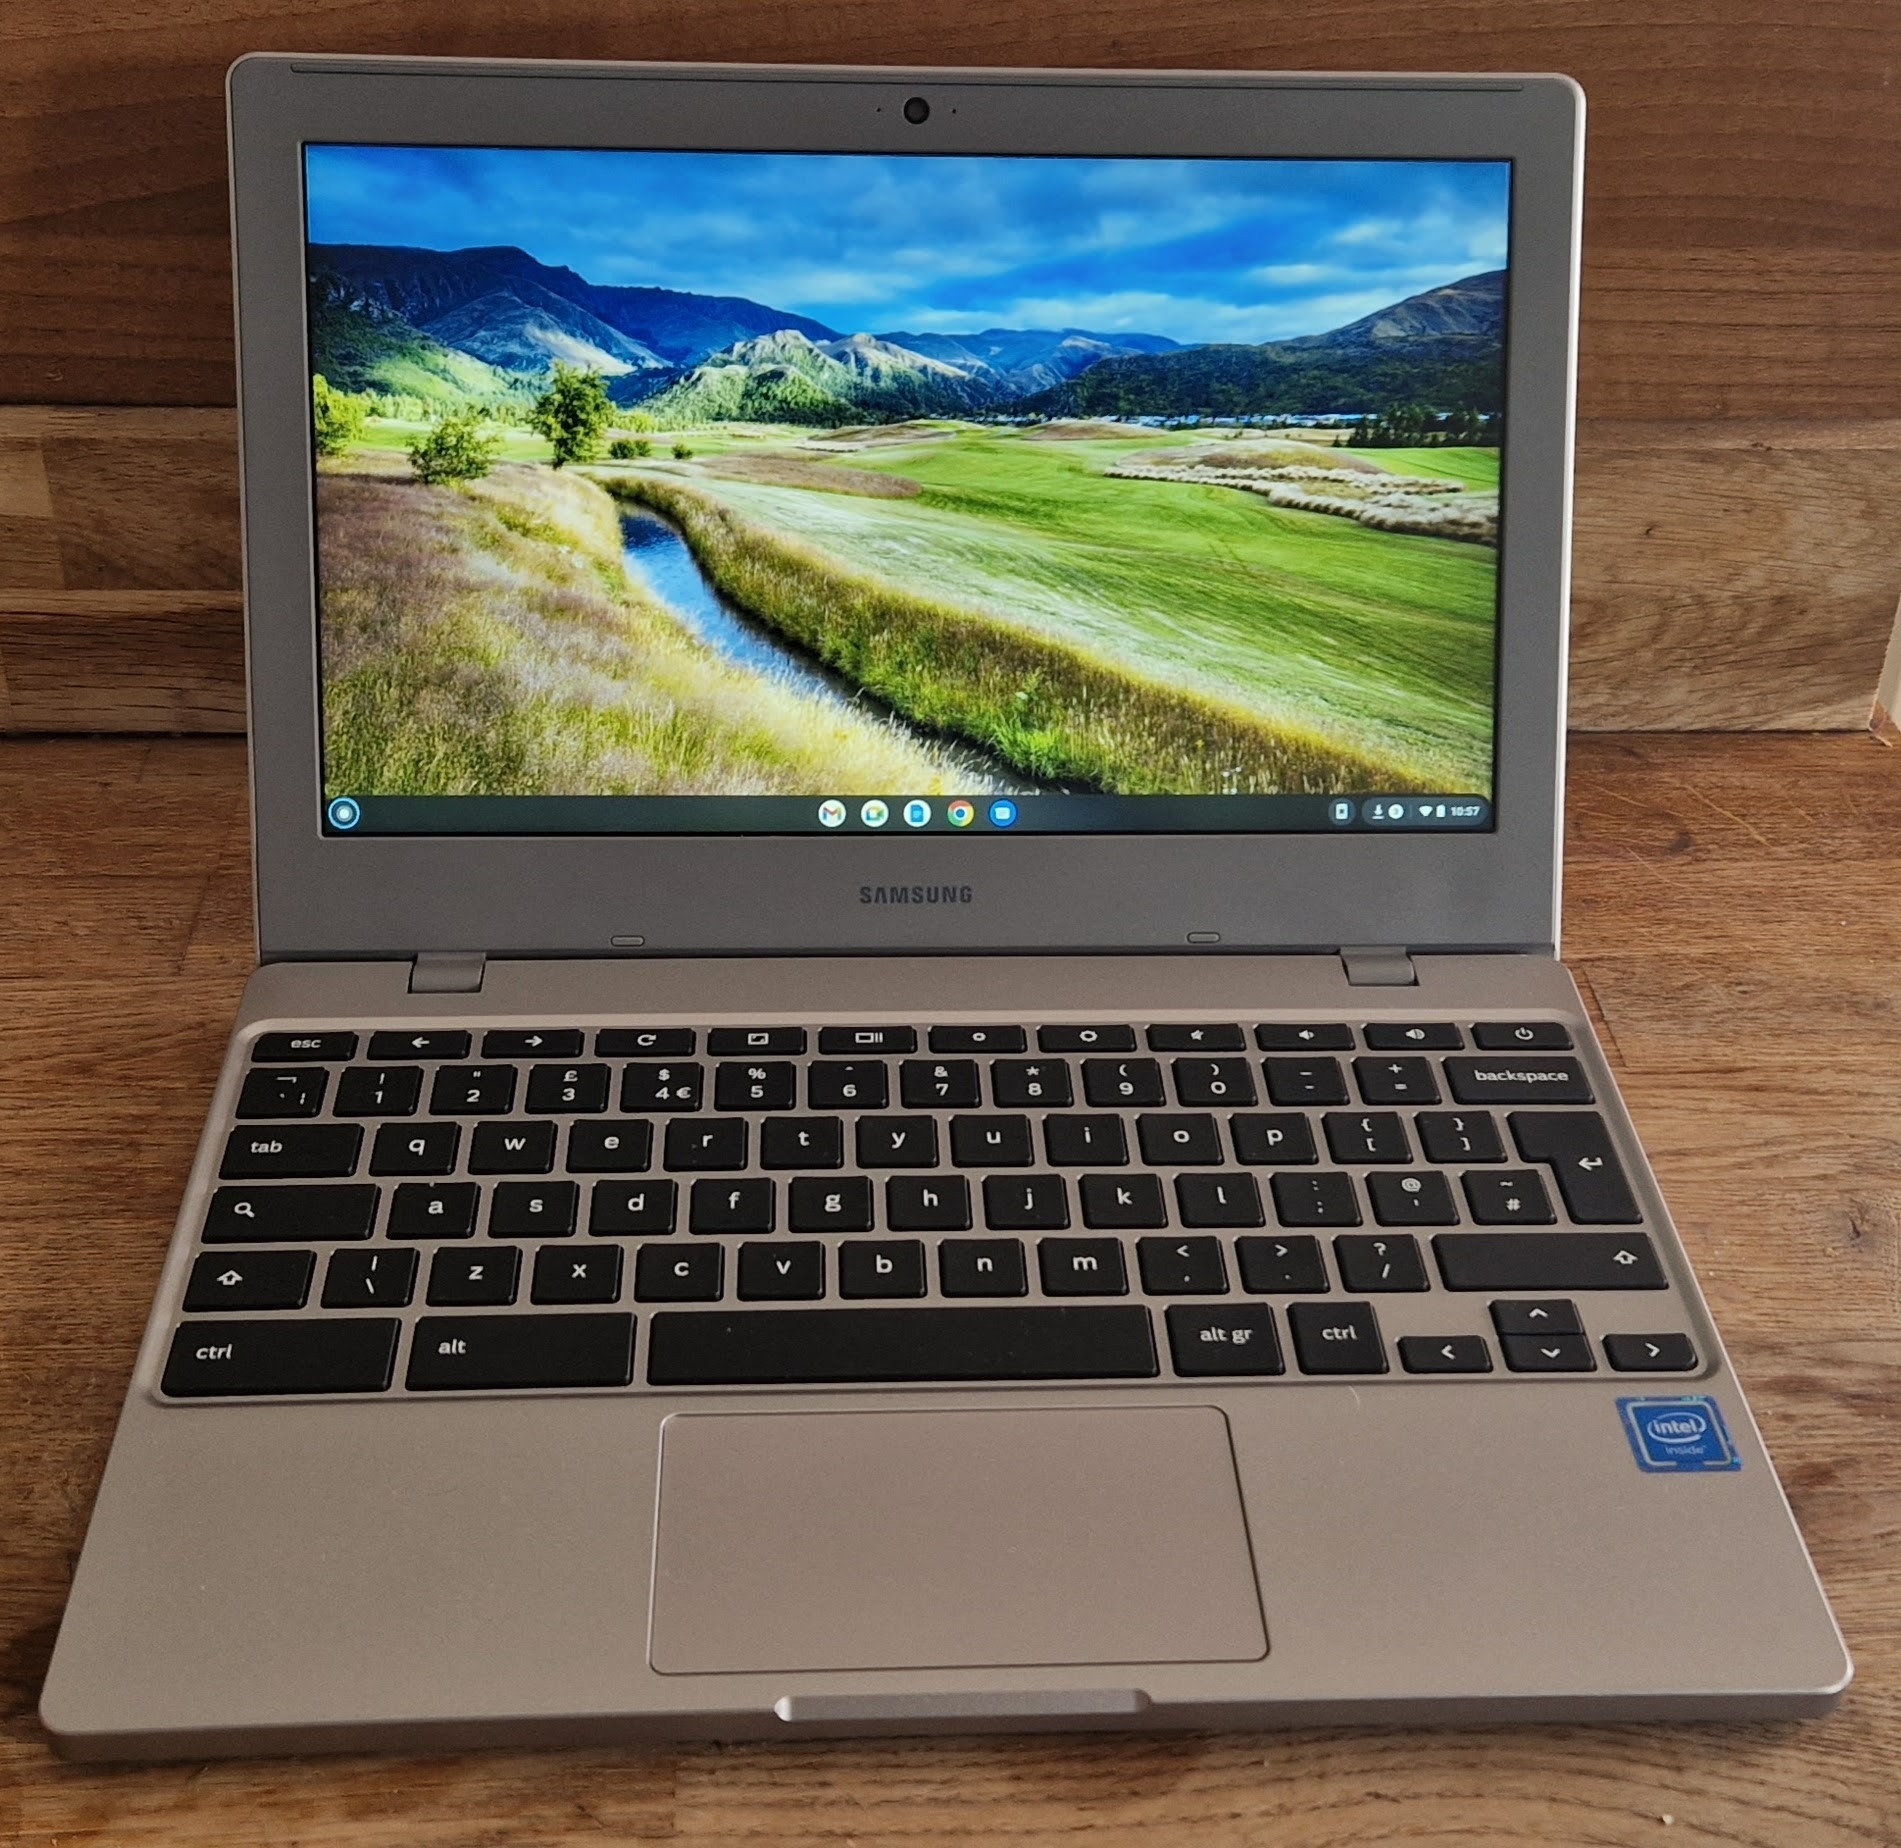 Samsung Chromebook 4. Operating System: Chrome OS Processor: Intel Celeron N4000 2.6Ghz Memory: 4Gb Display: 11.6” LED Screen Storage: 32Gb eMMC Disk